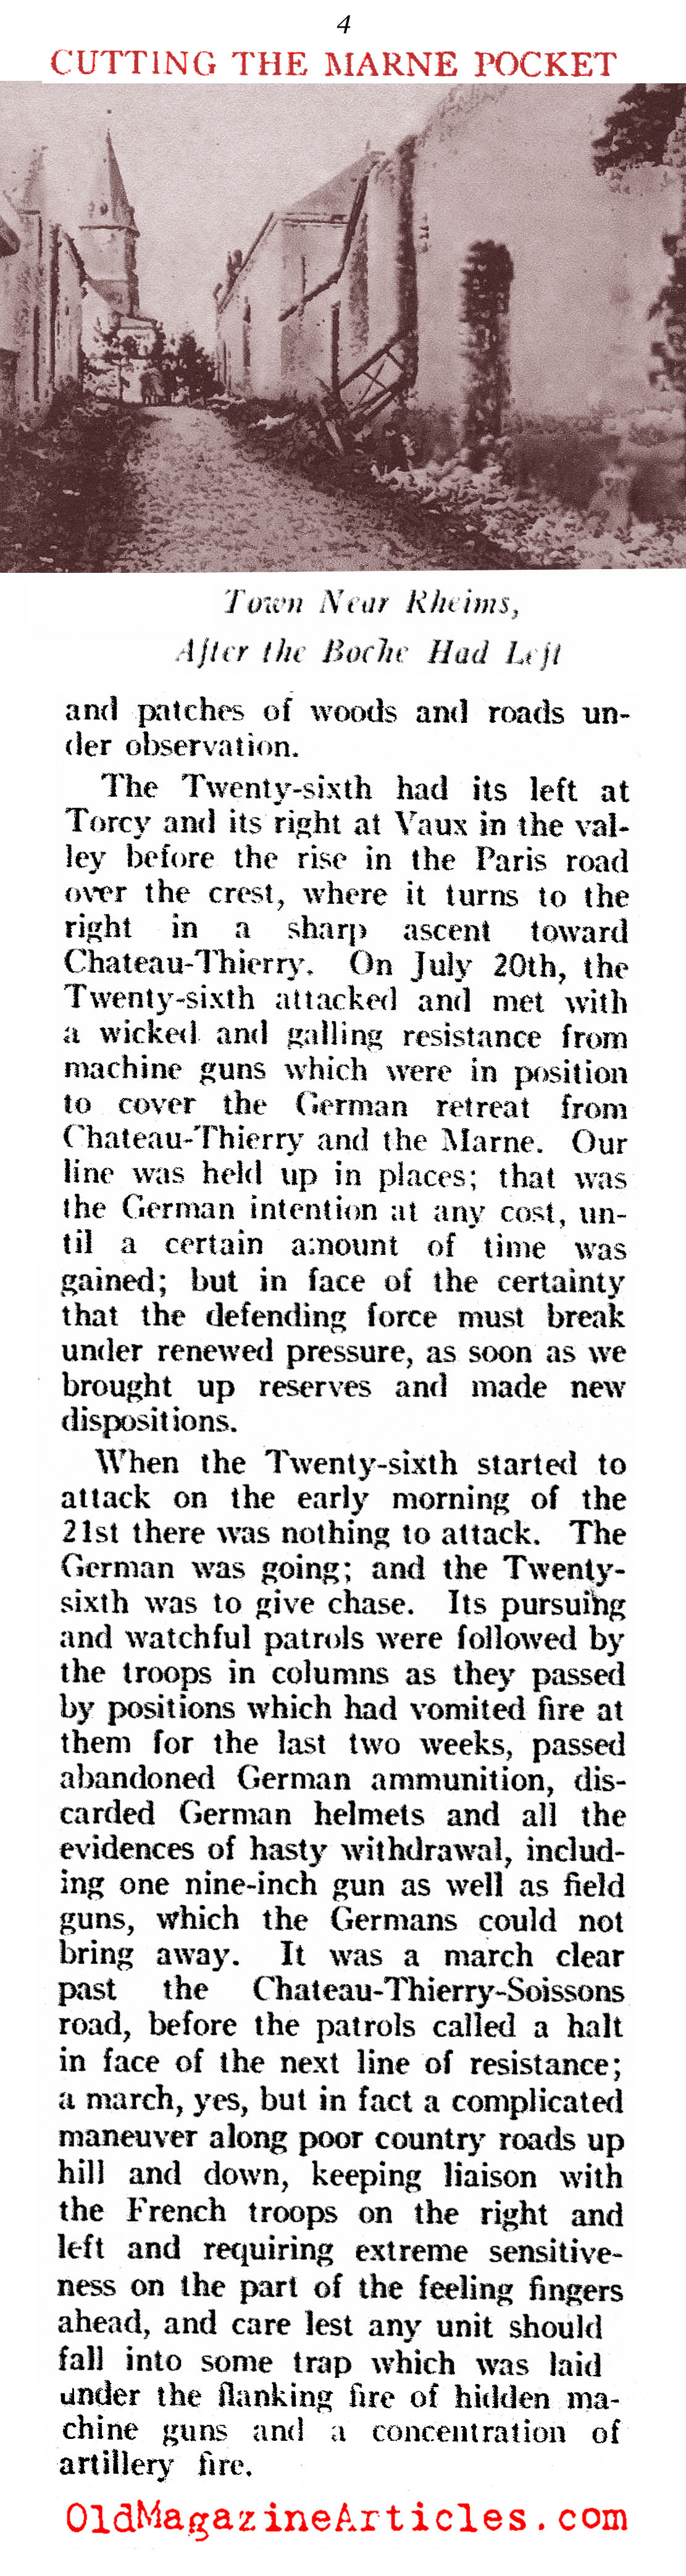 The Summer of 1918, pt. II (American Legion Weekly, 1919)